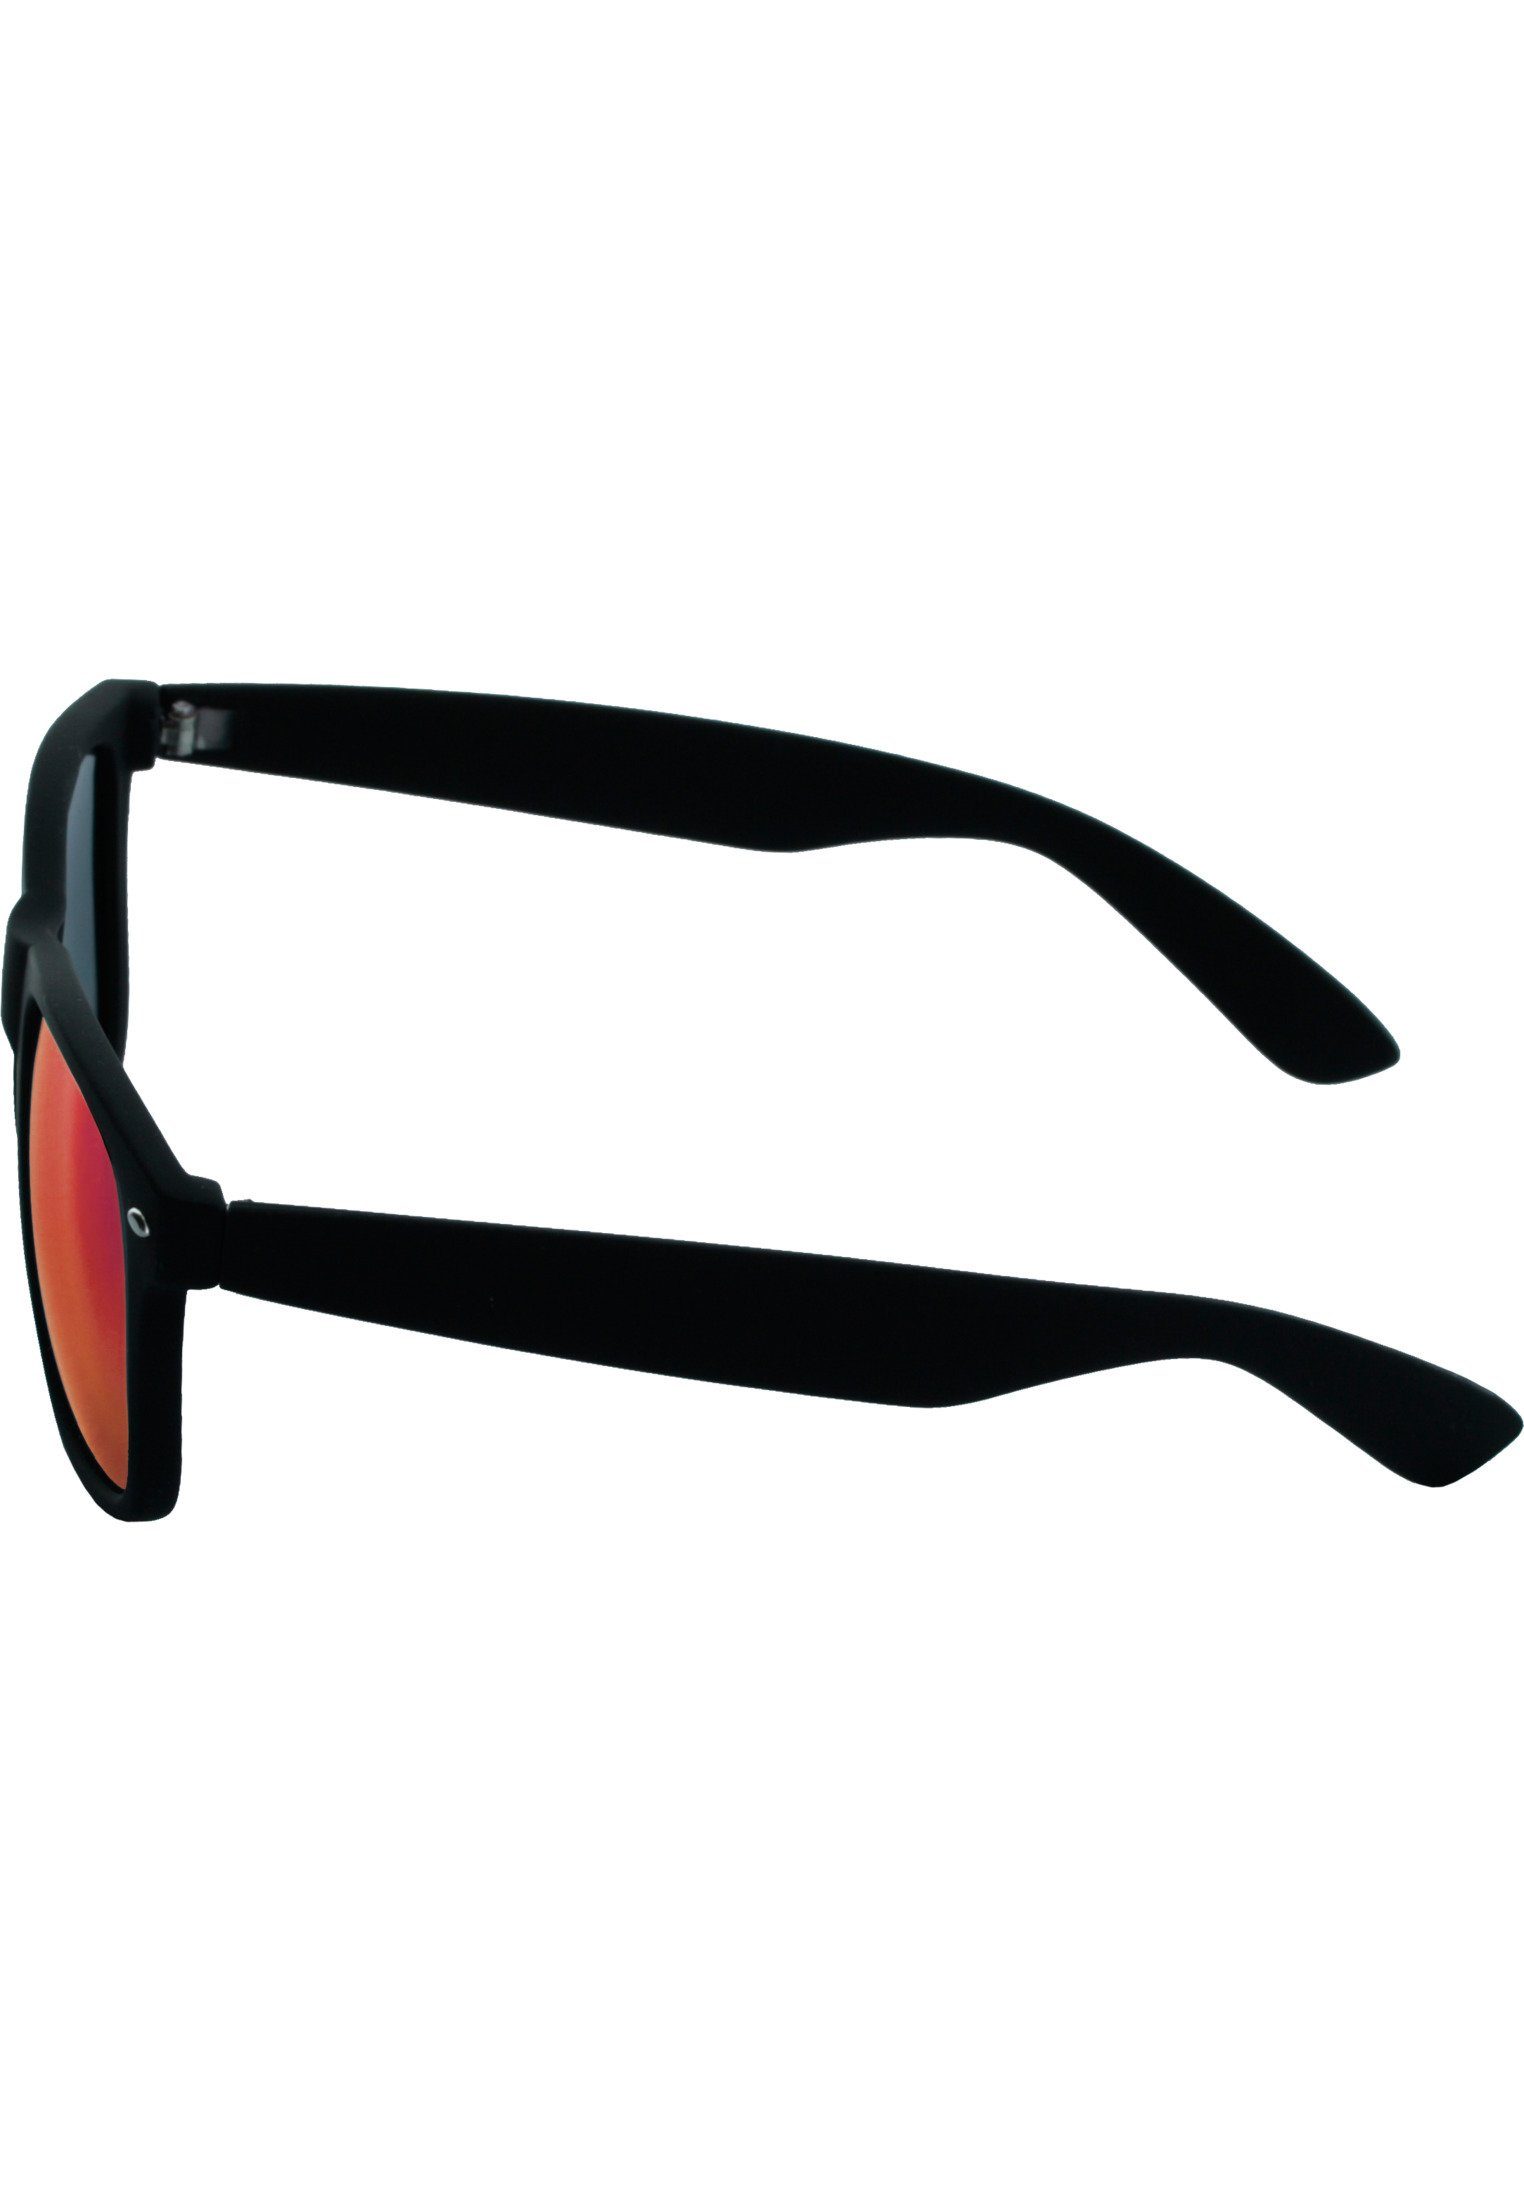 Accessoires Likoma MSTRDS Sonnenbrille Mirror blk/red Sunglasses